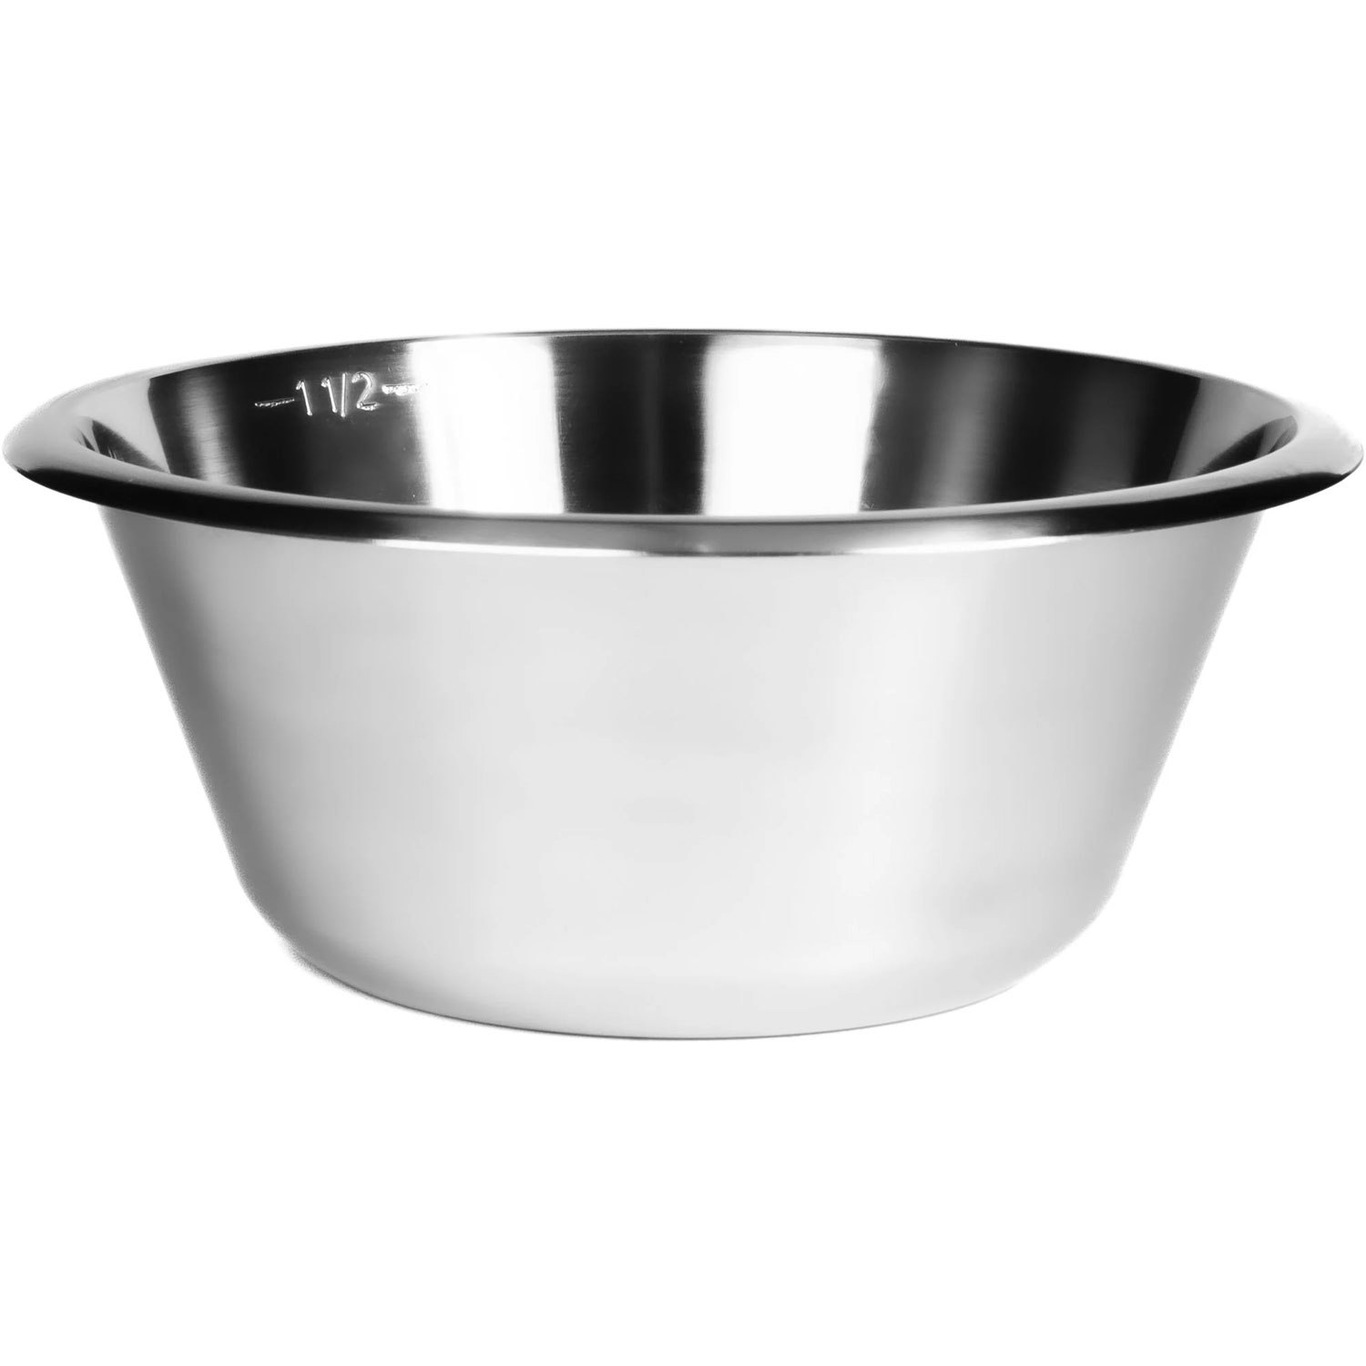 https://royaldesign.com/image/2/mareld-mareld-bowl-stainless-steel-15l-0?w=800&quality=80